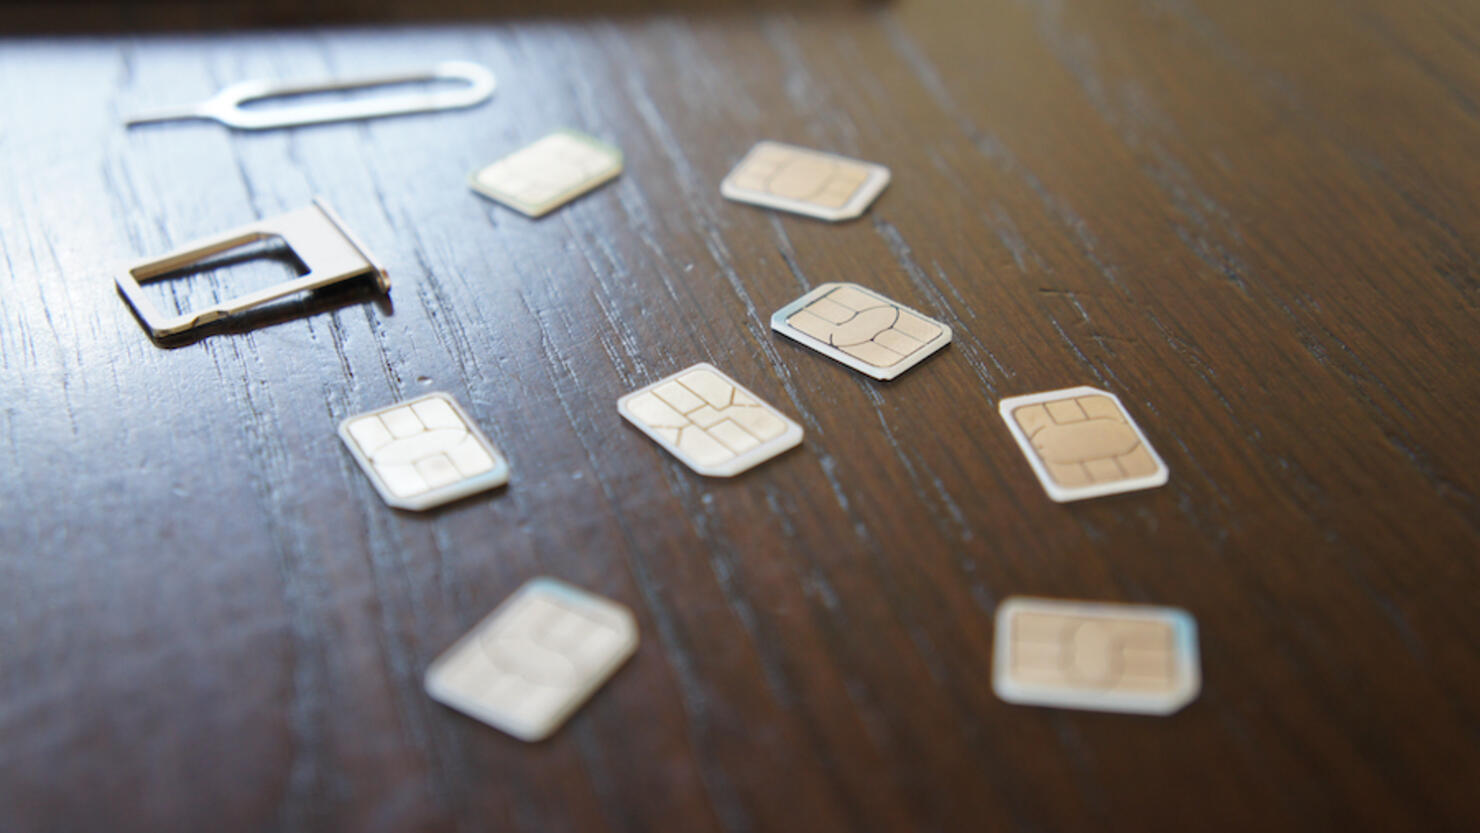 many nano SIM cards to choose